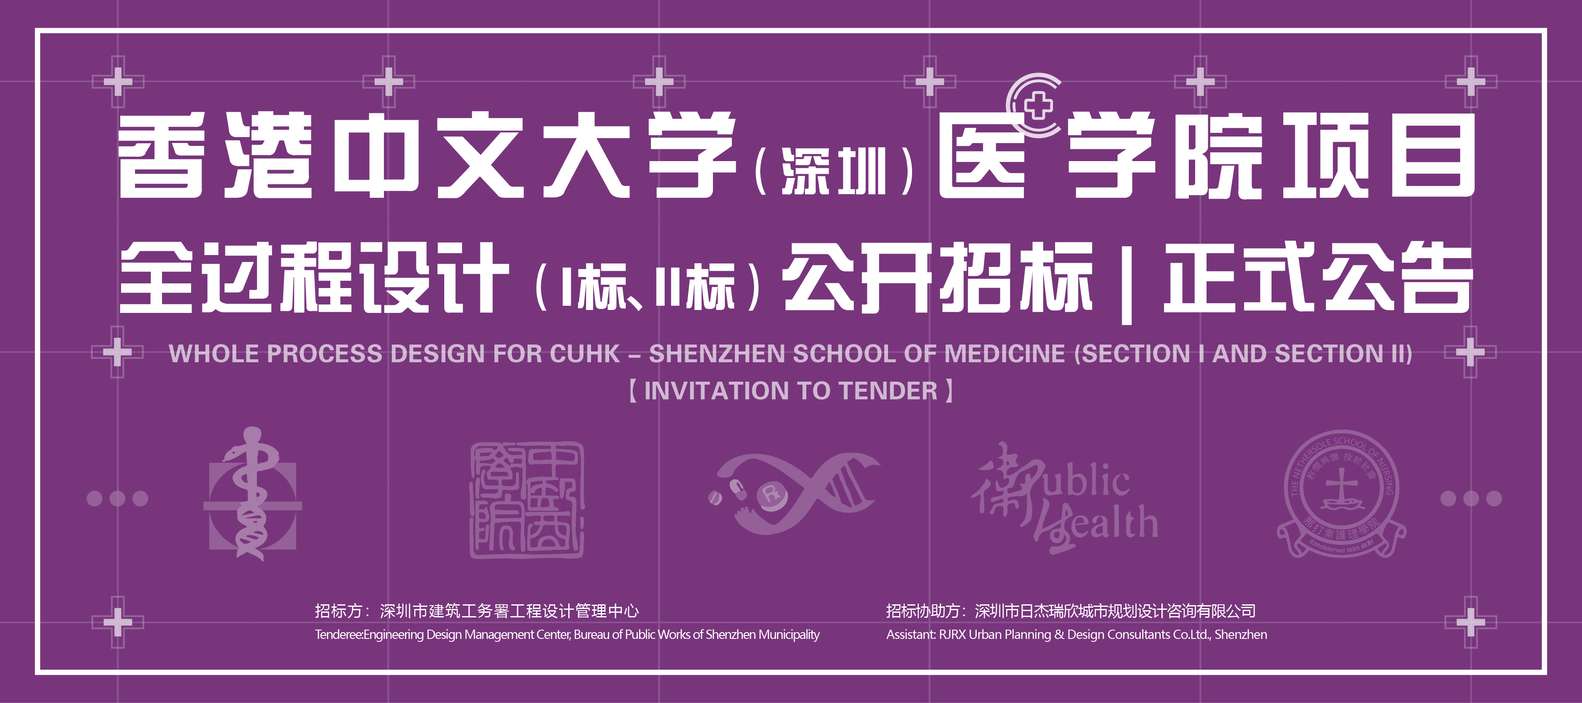 Call for Entries: Whole Process Design for CUHK - Shenzhen School of Medicine (Bid I and Bid II)